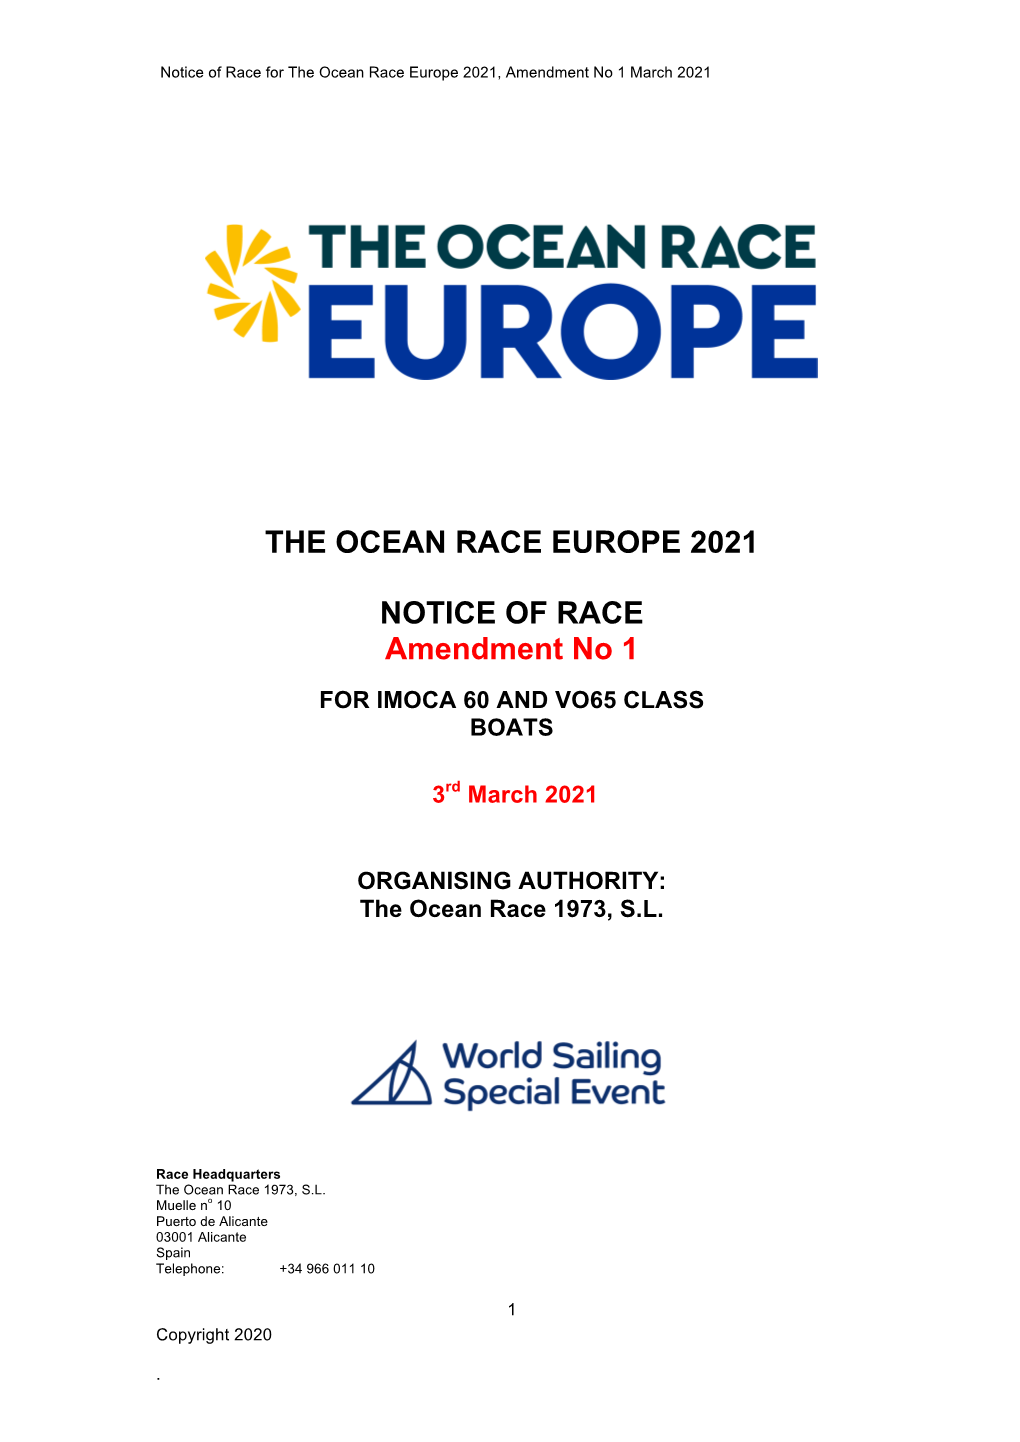 THE OCEAN RACE EUROPE 2021 NOTICE of RACE Amendment No 1